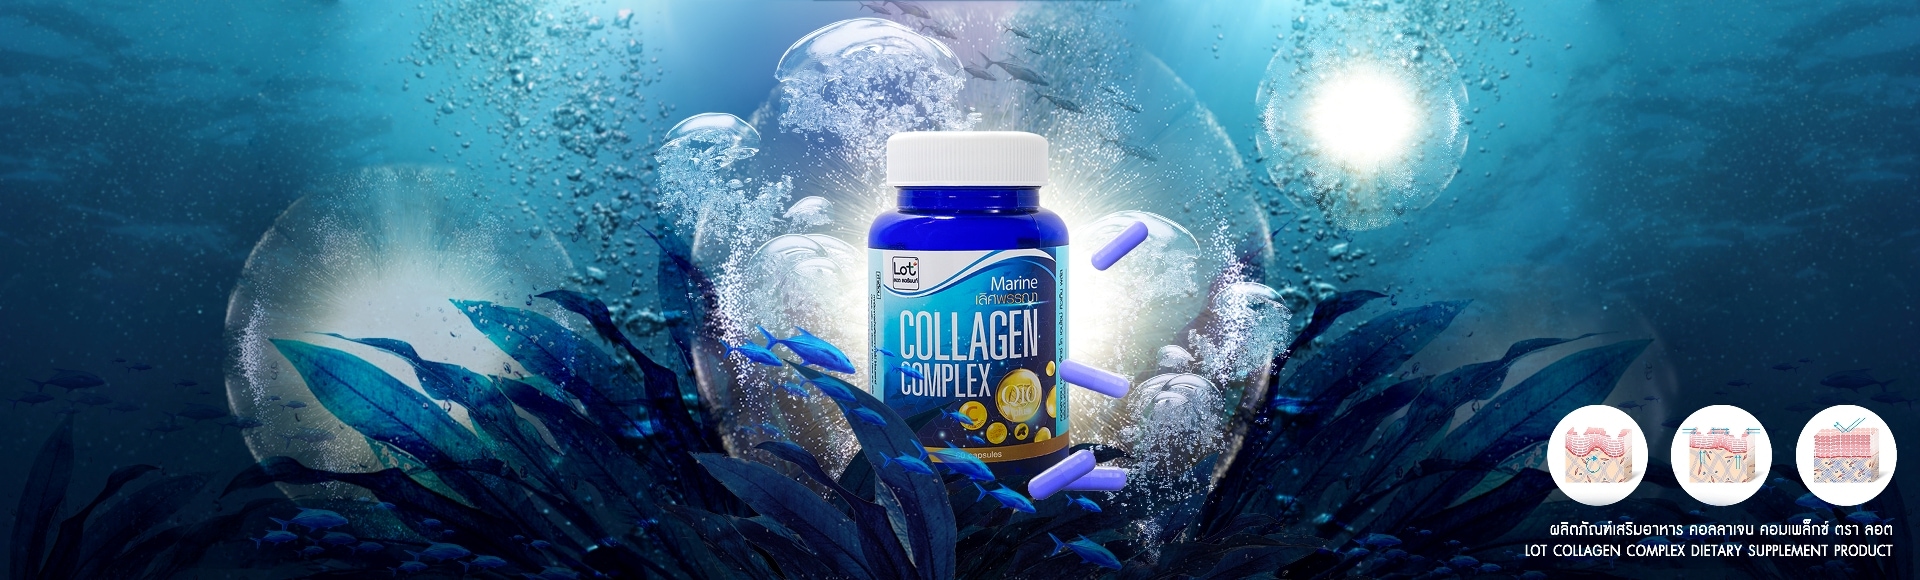 Collagen Complex Dietary Supplement (LOT Brand)